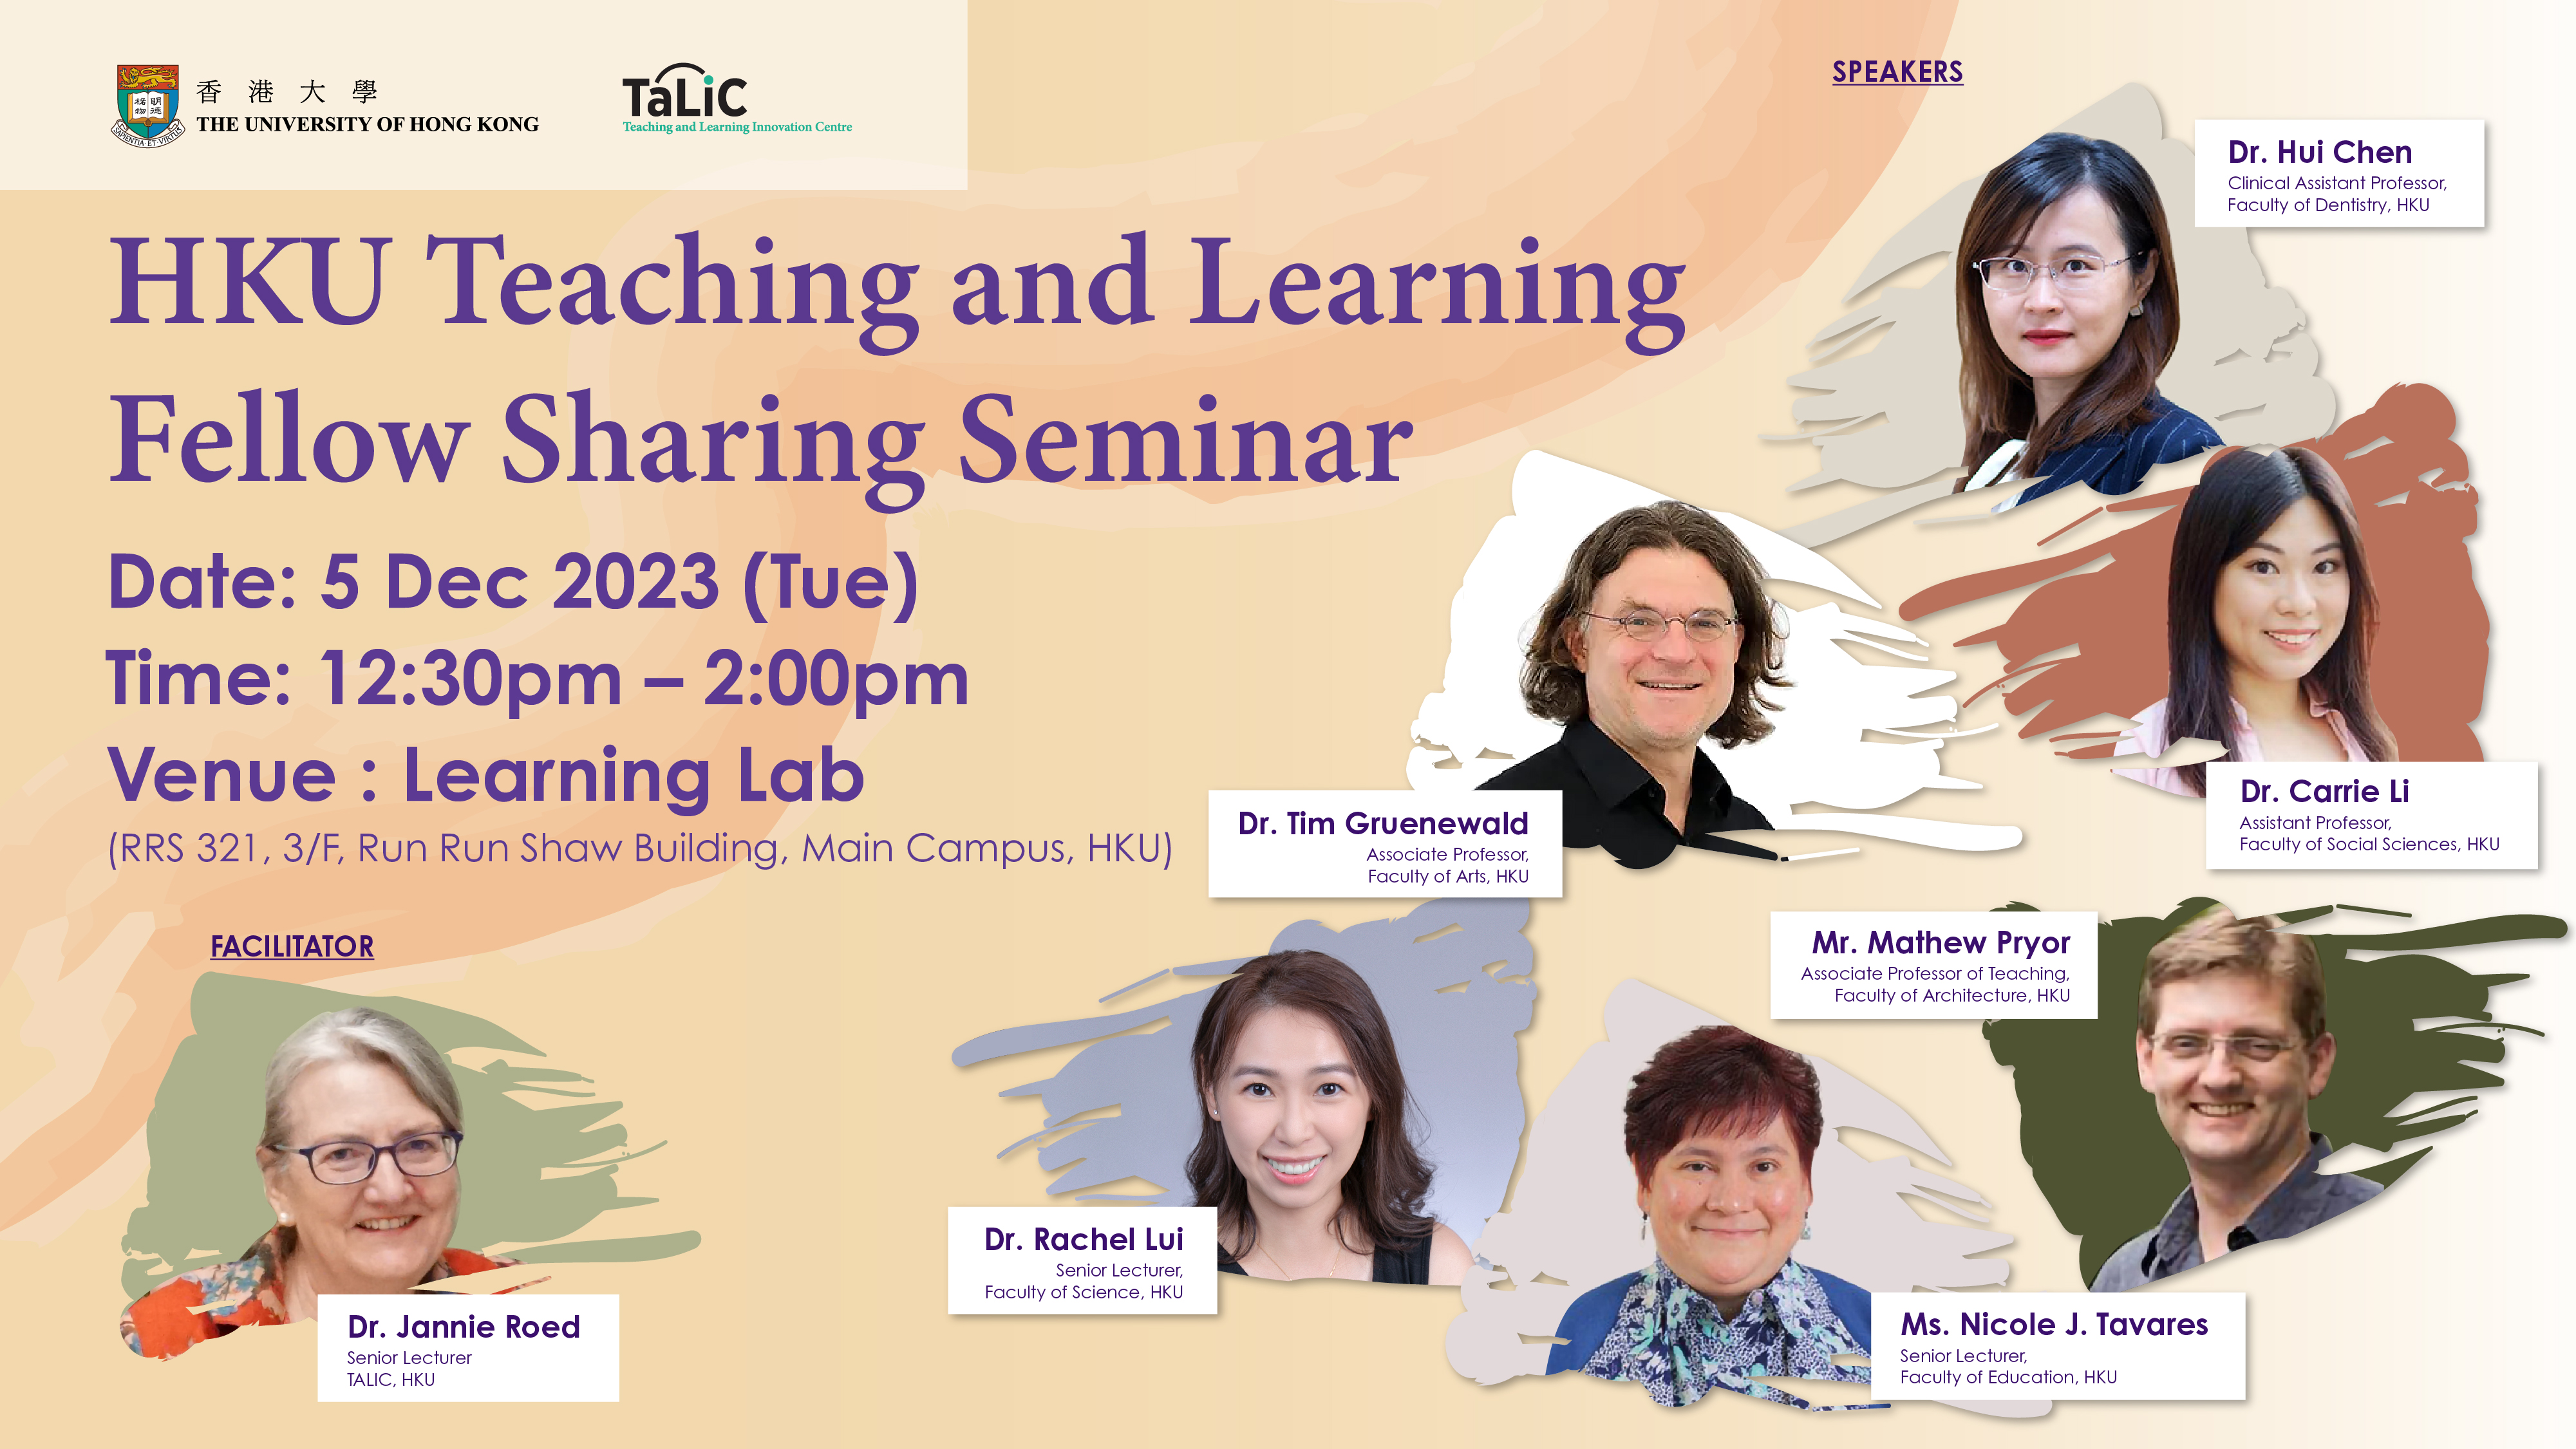 HKU Teaching and Learning Fellow Sharing Seminar